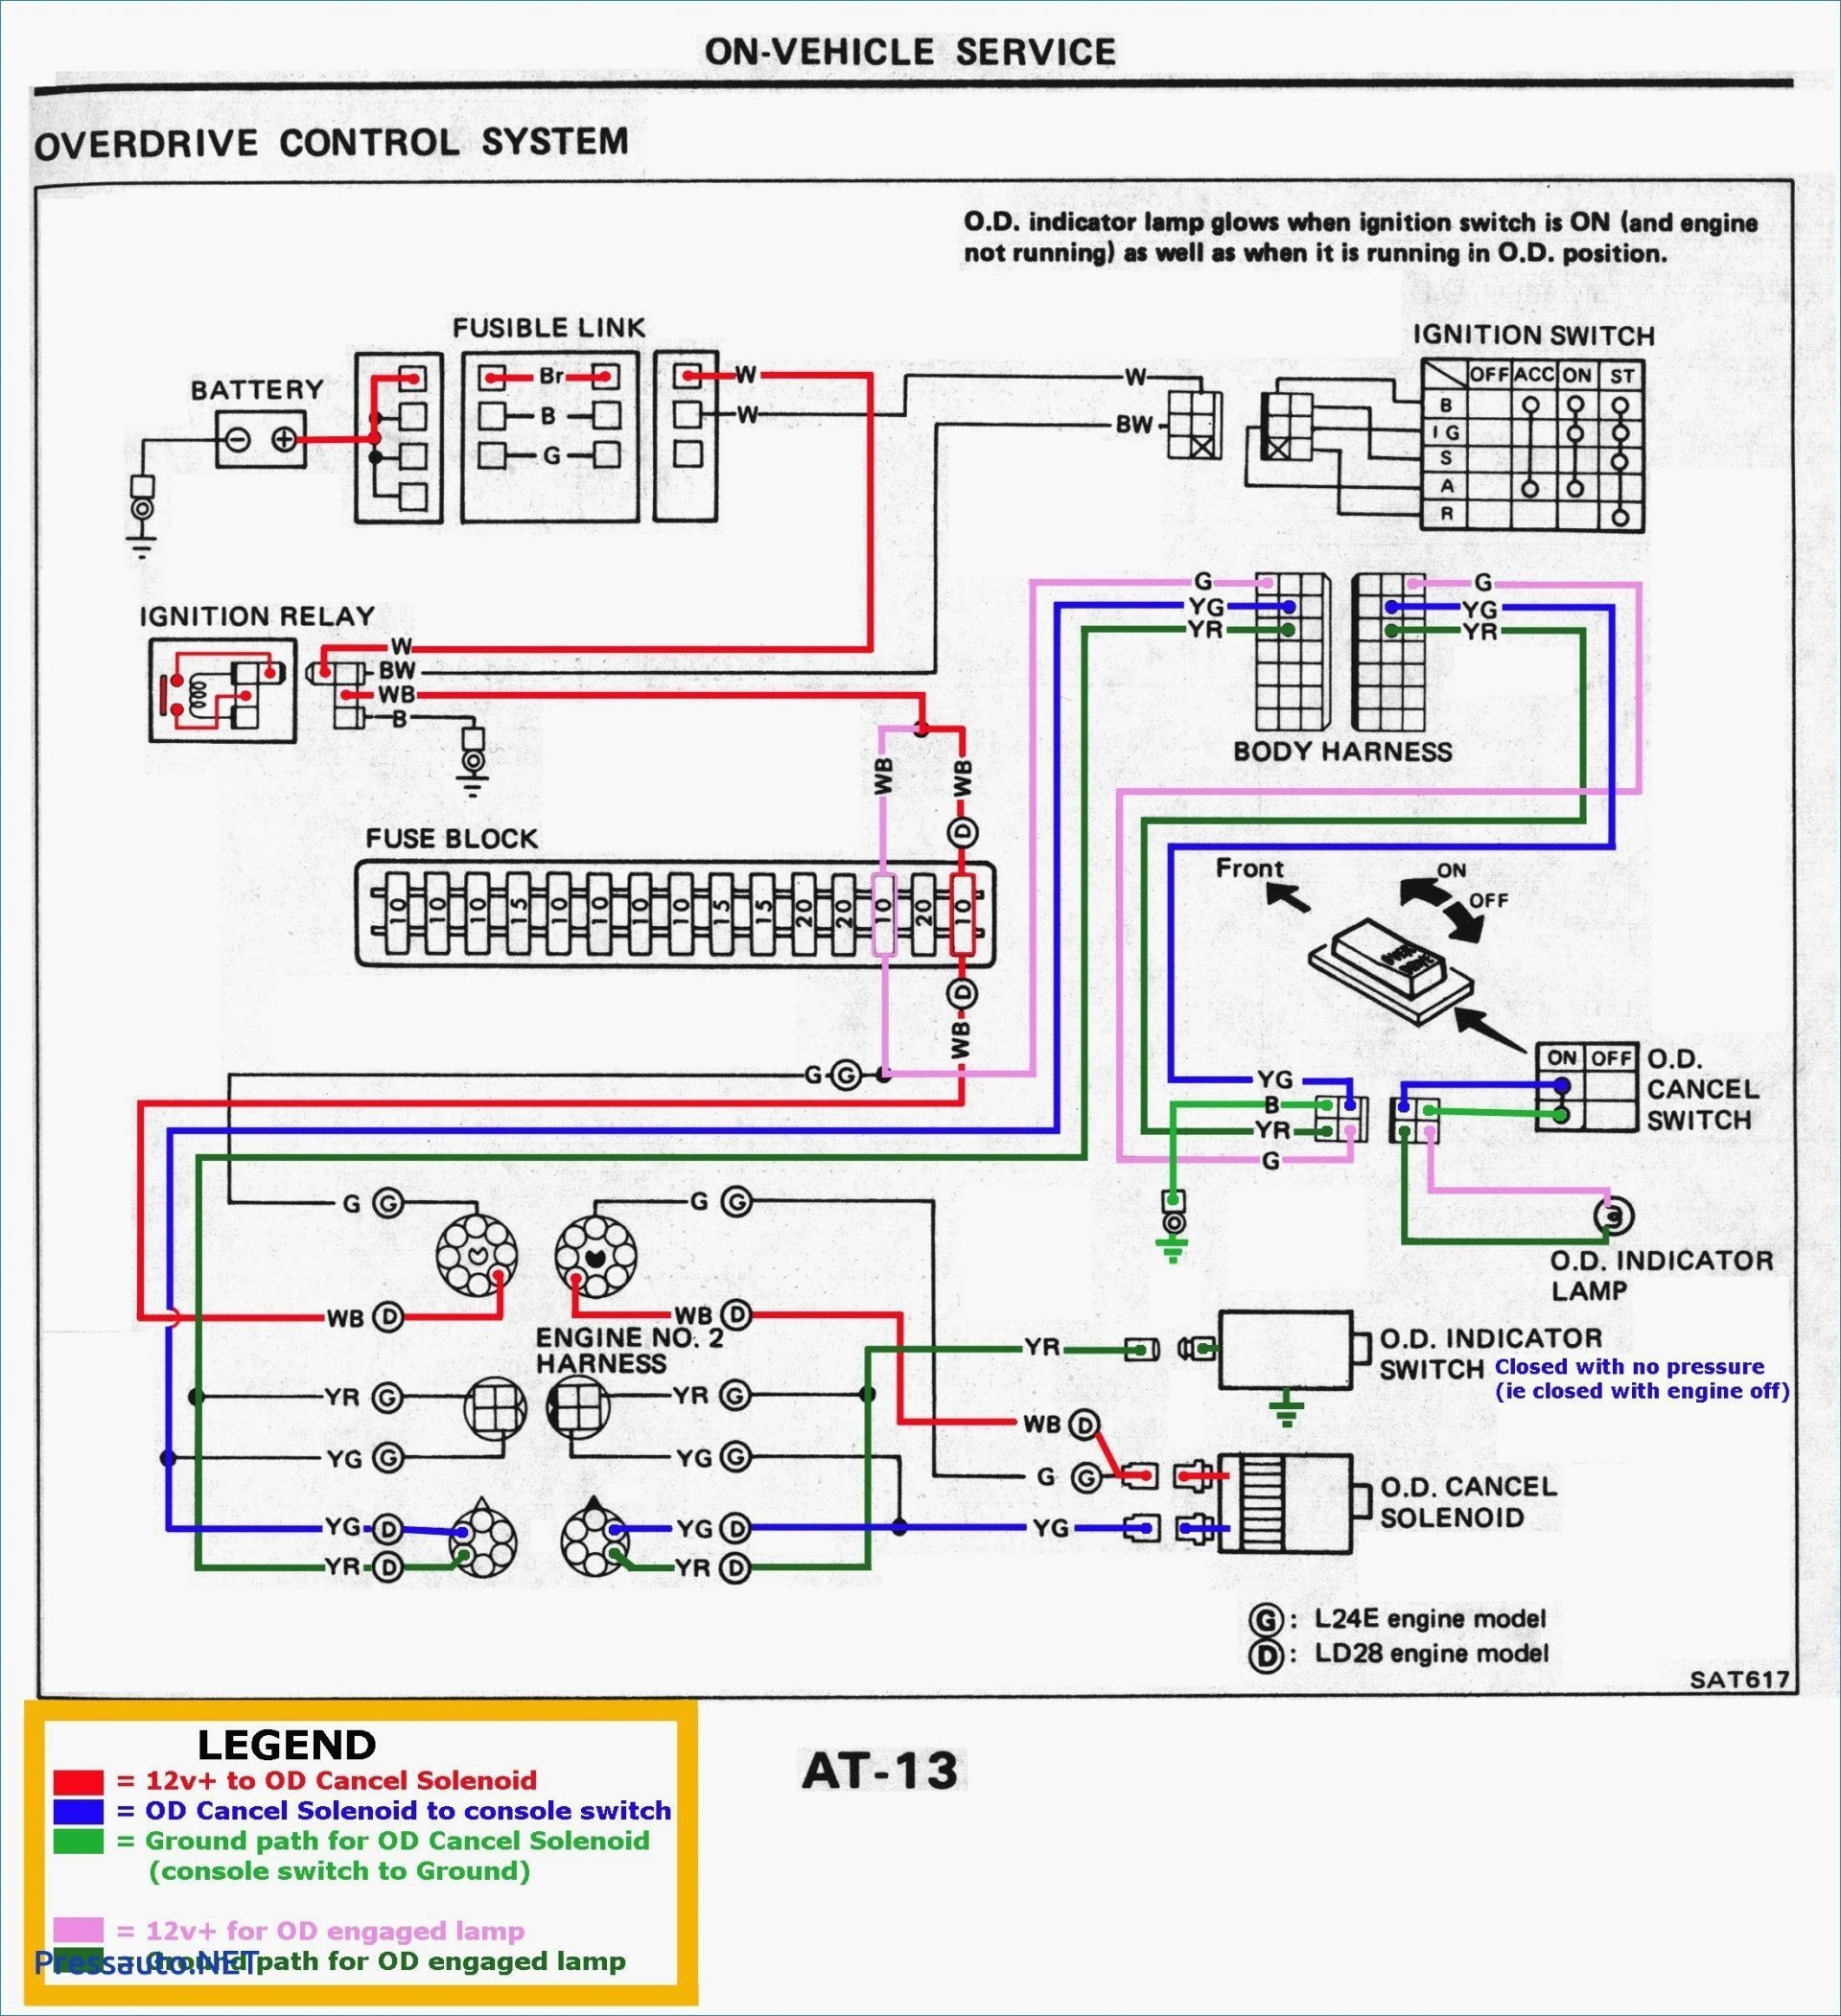 Car Powertrain Diagram Collection Automotive Wiring Diagram Color Codes Download Of Car Powertrain Diagram